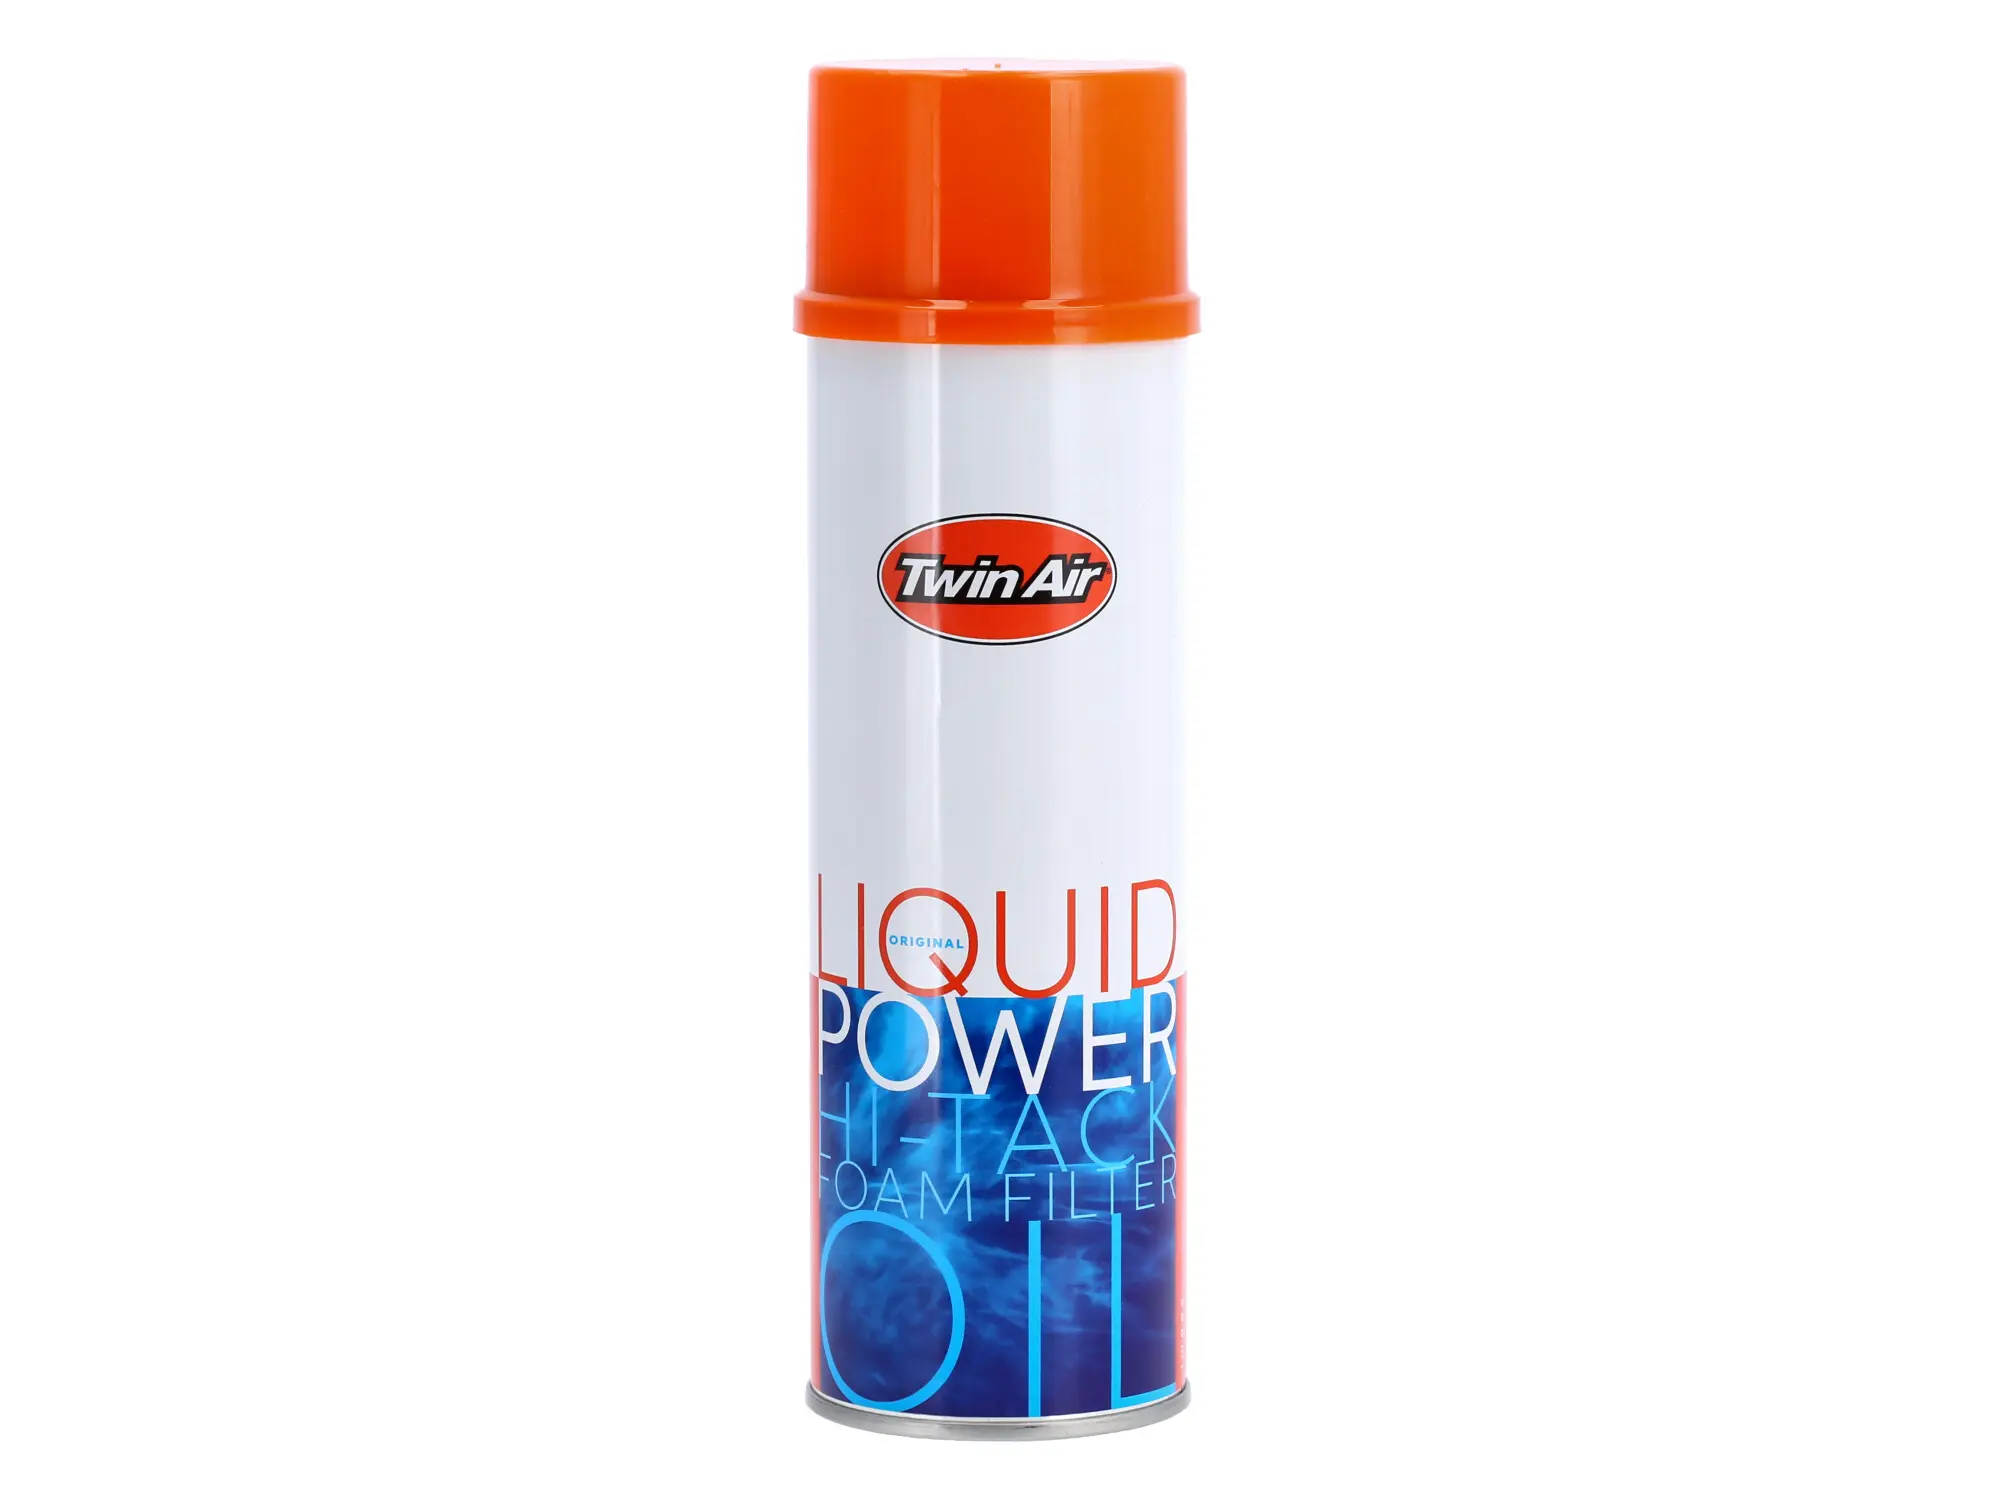 Luftfilteröl "TwinAir" Liquid Power Spray - 500ml, Item no: 10077935 - Image 1